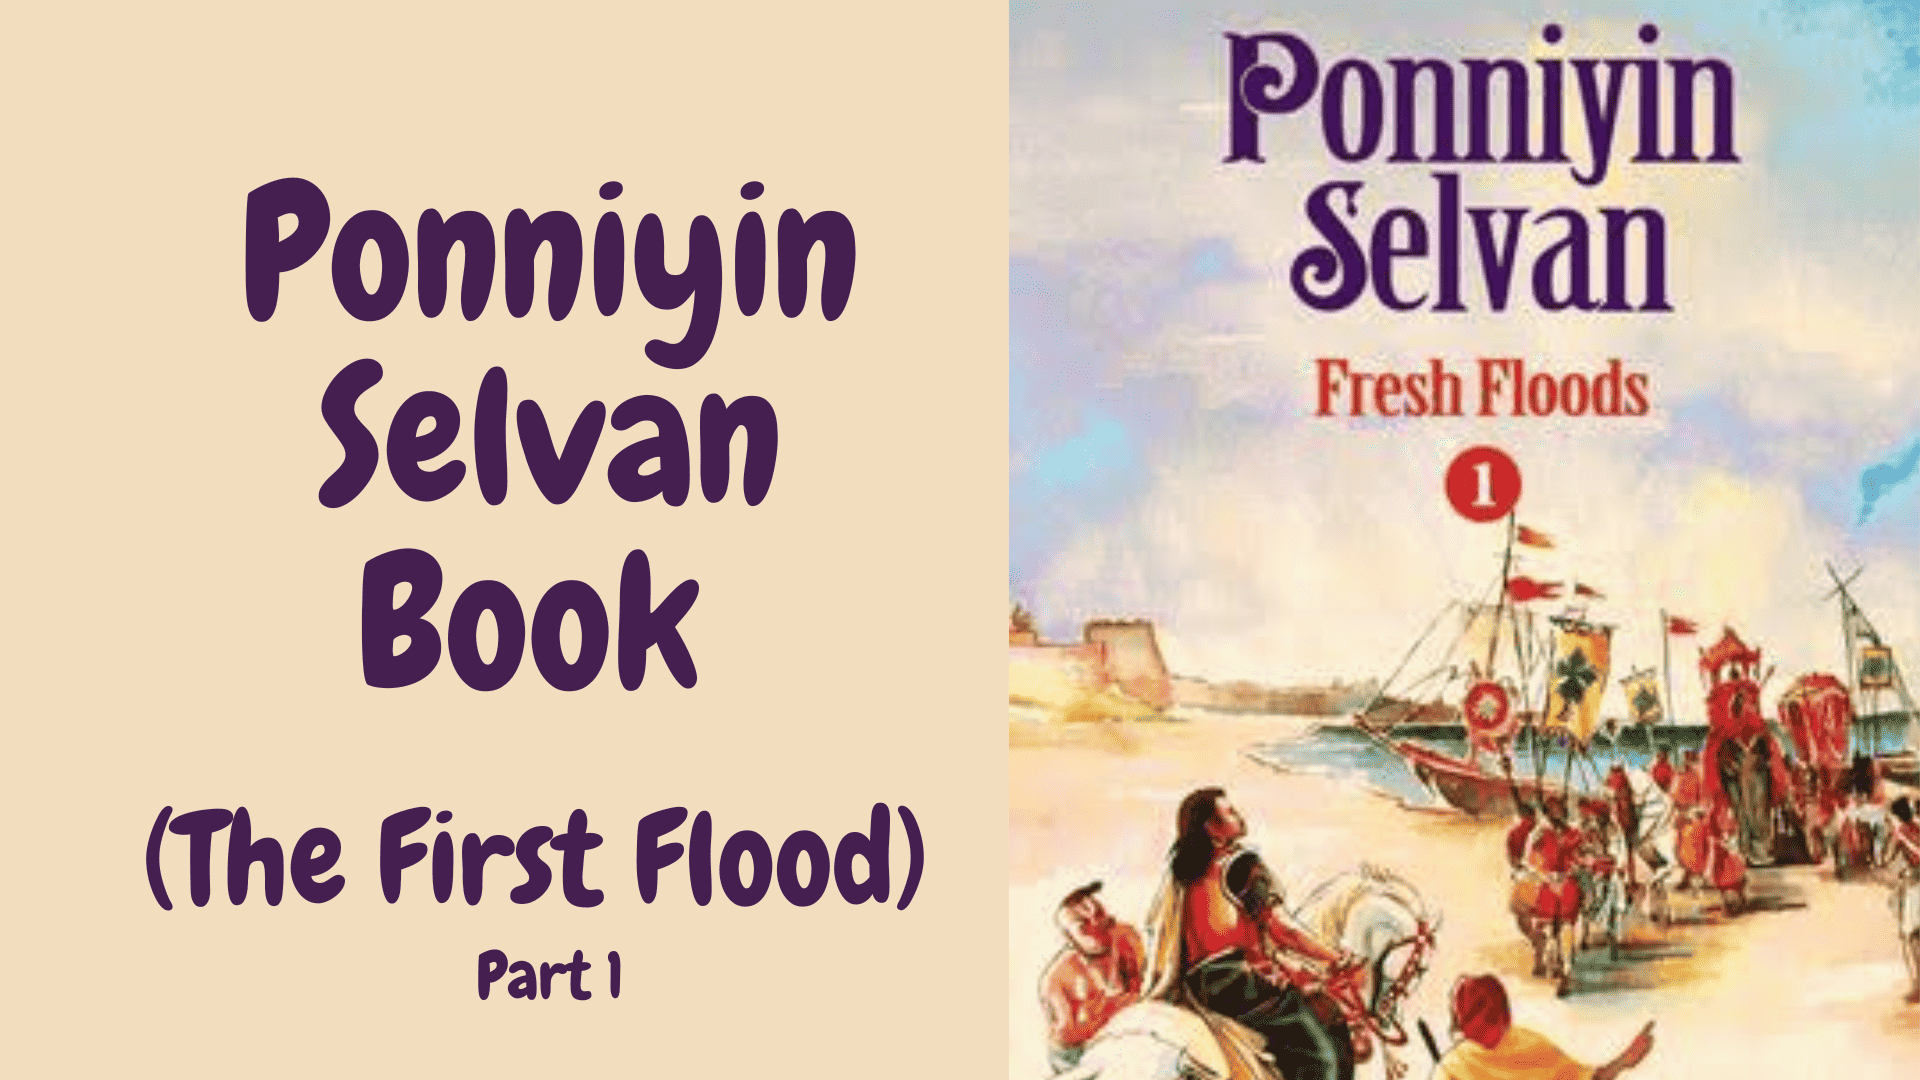 Ponniyin Selvan Book cover image